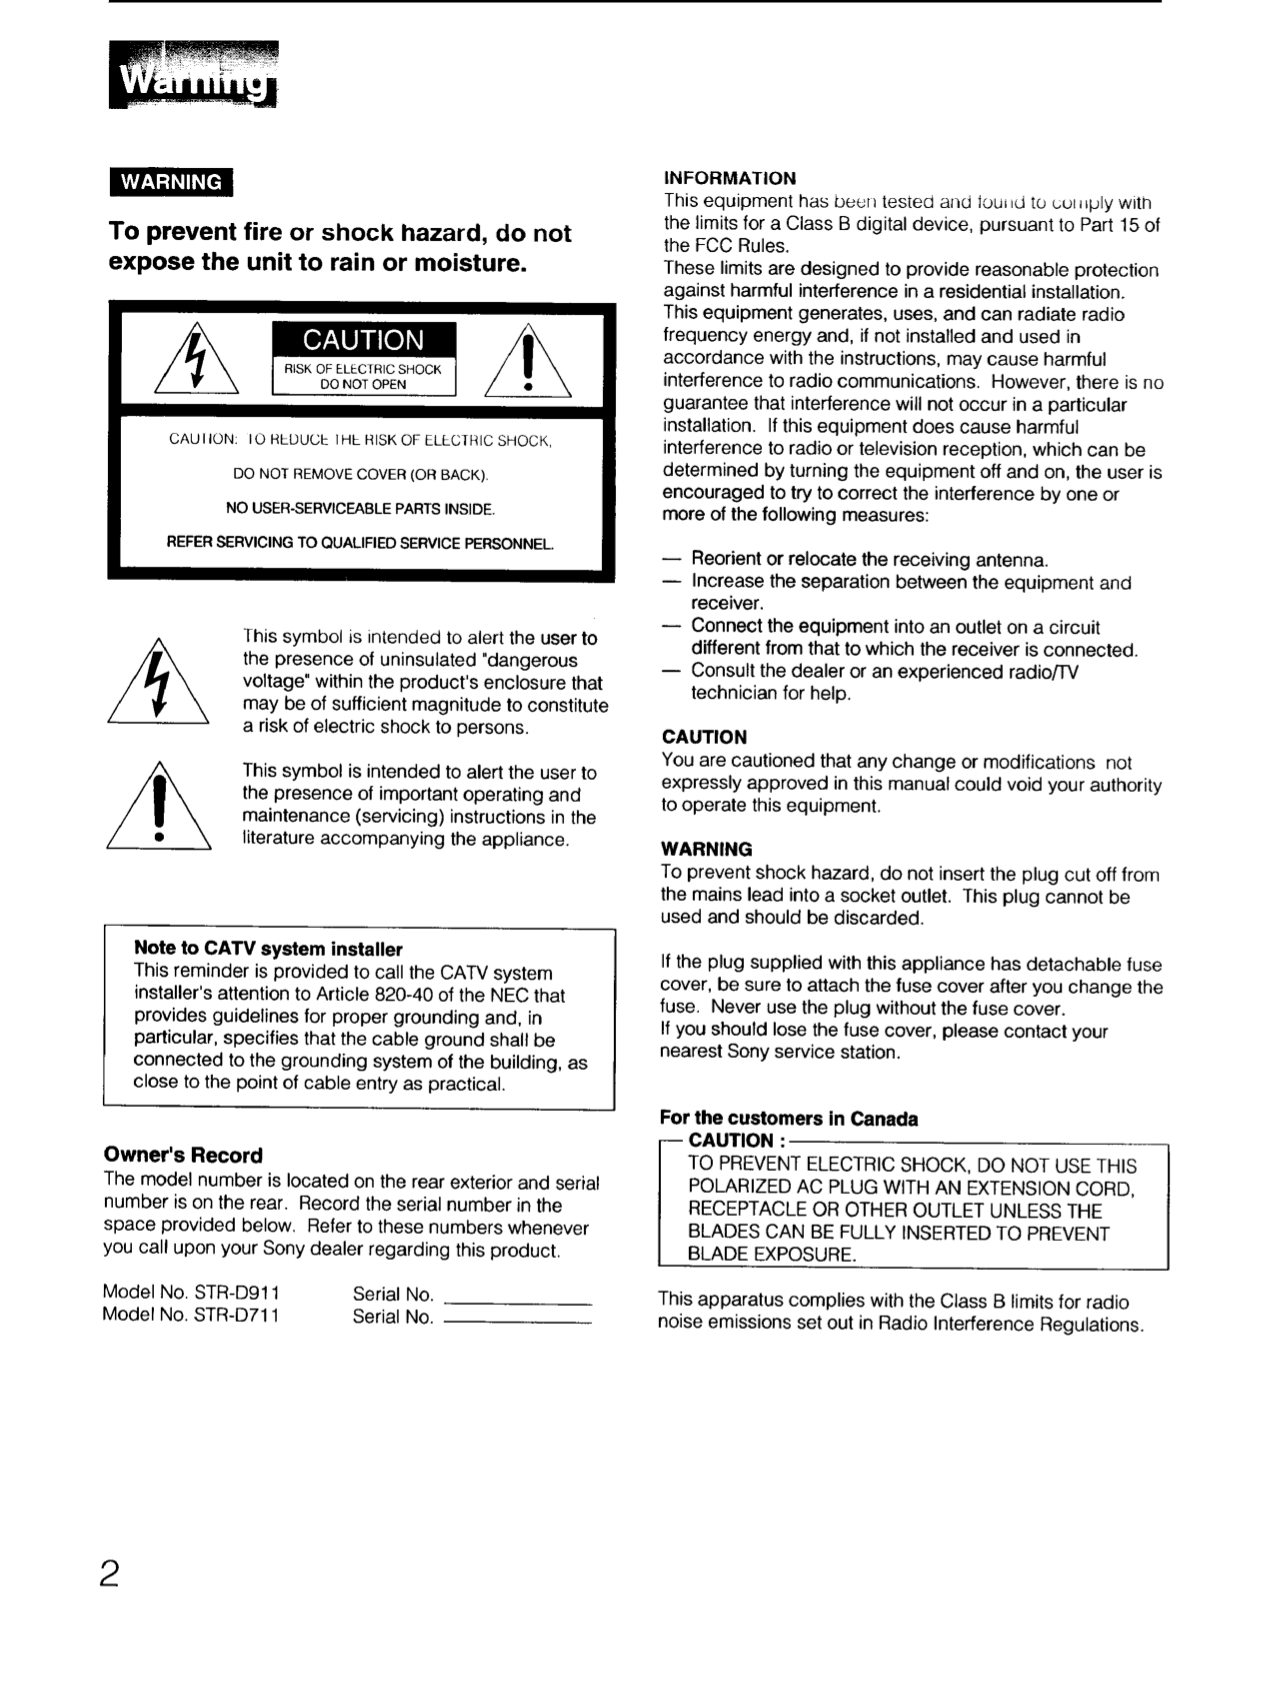 PDF manual for Sony Receiver STR-D711